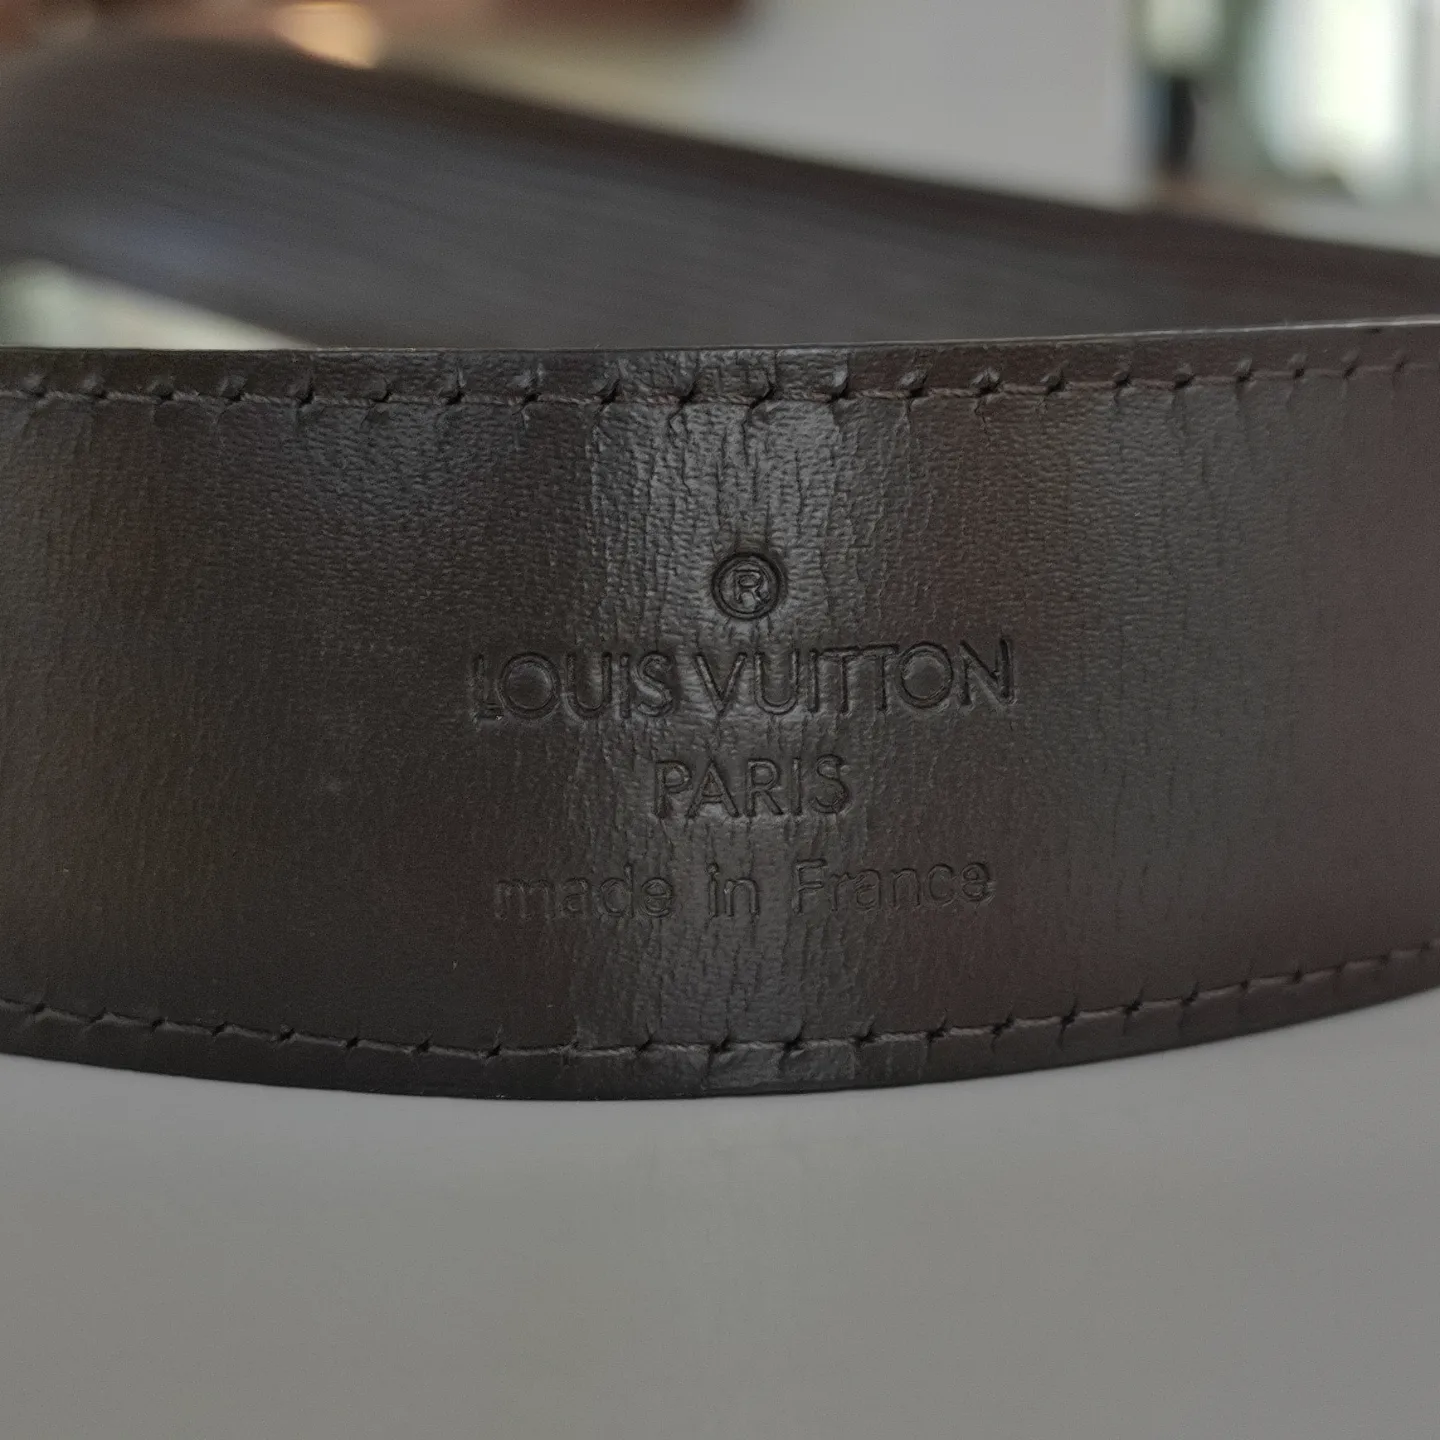 Cintura Louis Vuitton Originale! in 20124 Milano for €100.00 for